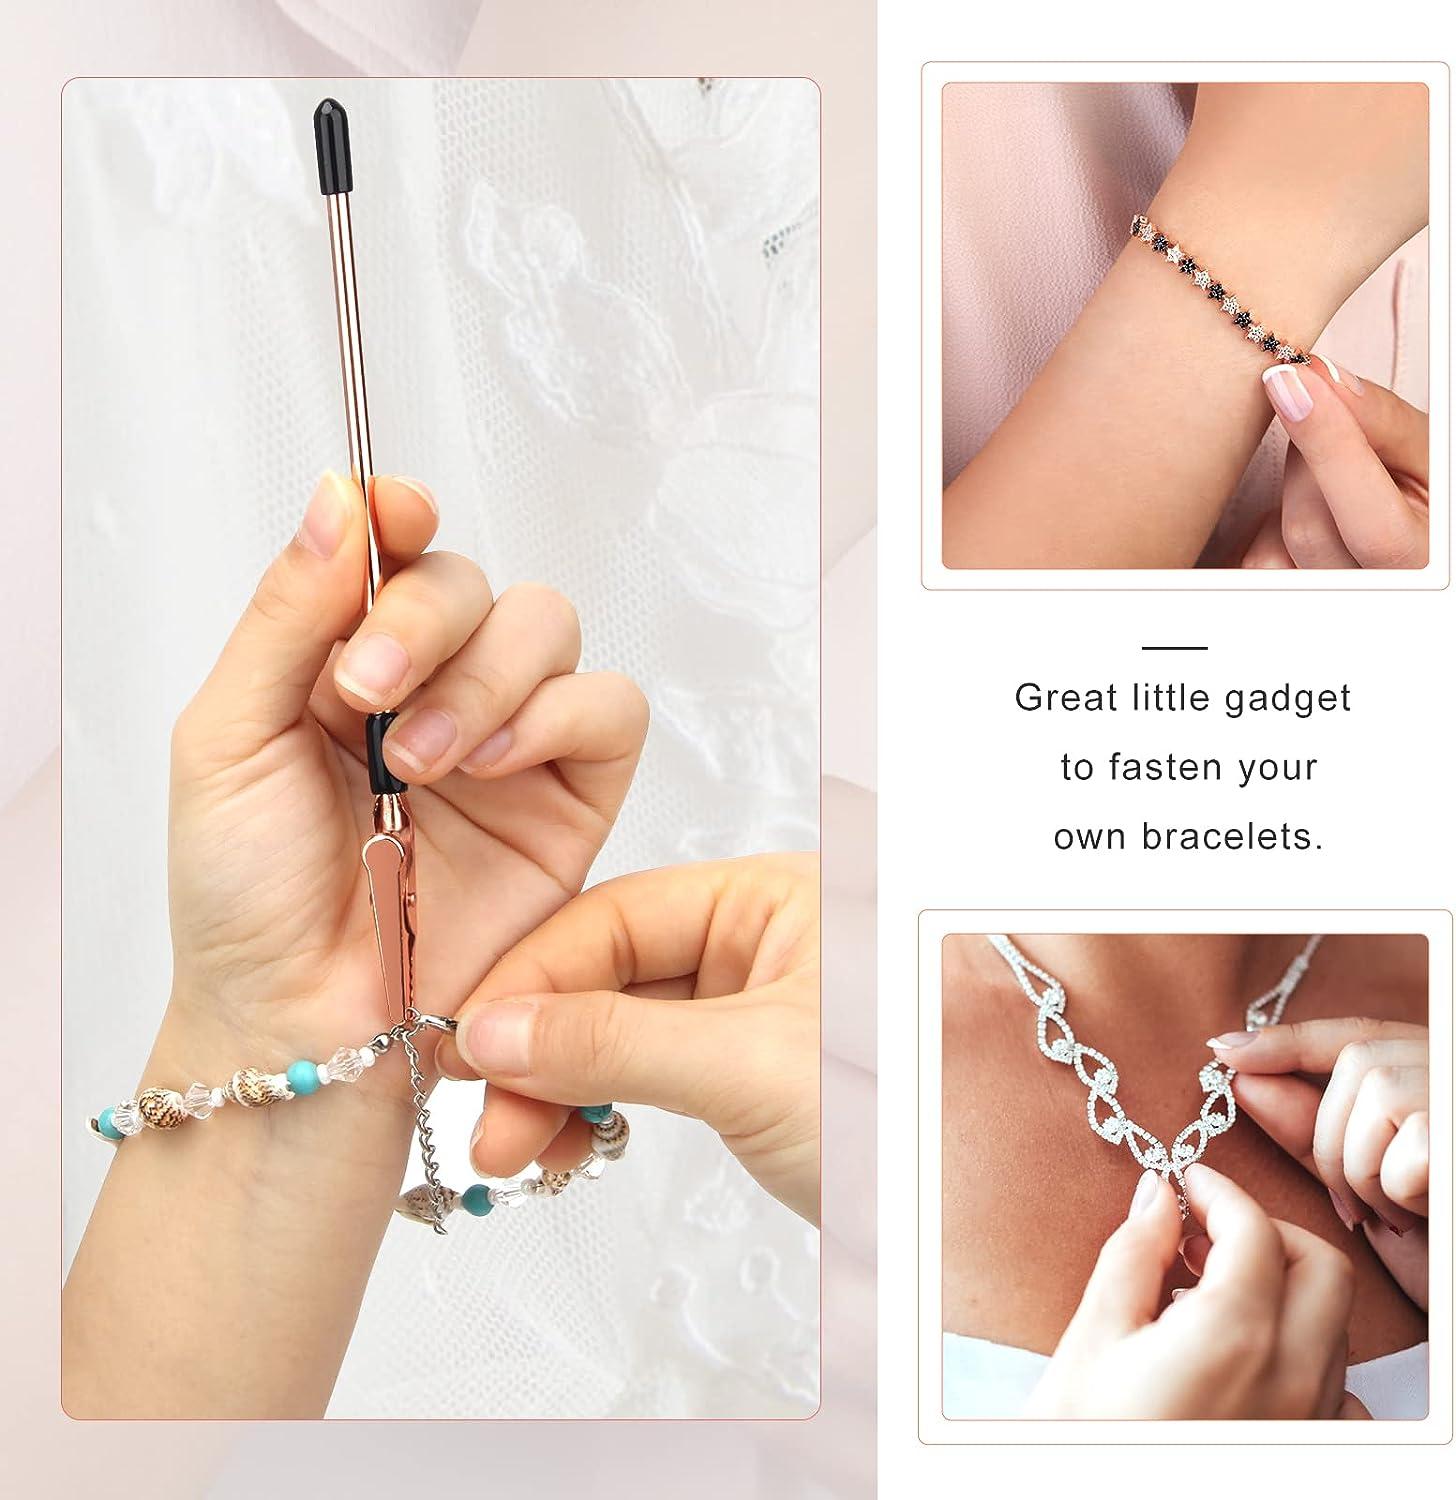 Coitak Bracelet Helper Tool Jewelry Helper 3 Pieces Bracelet Clasp